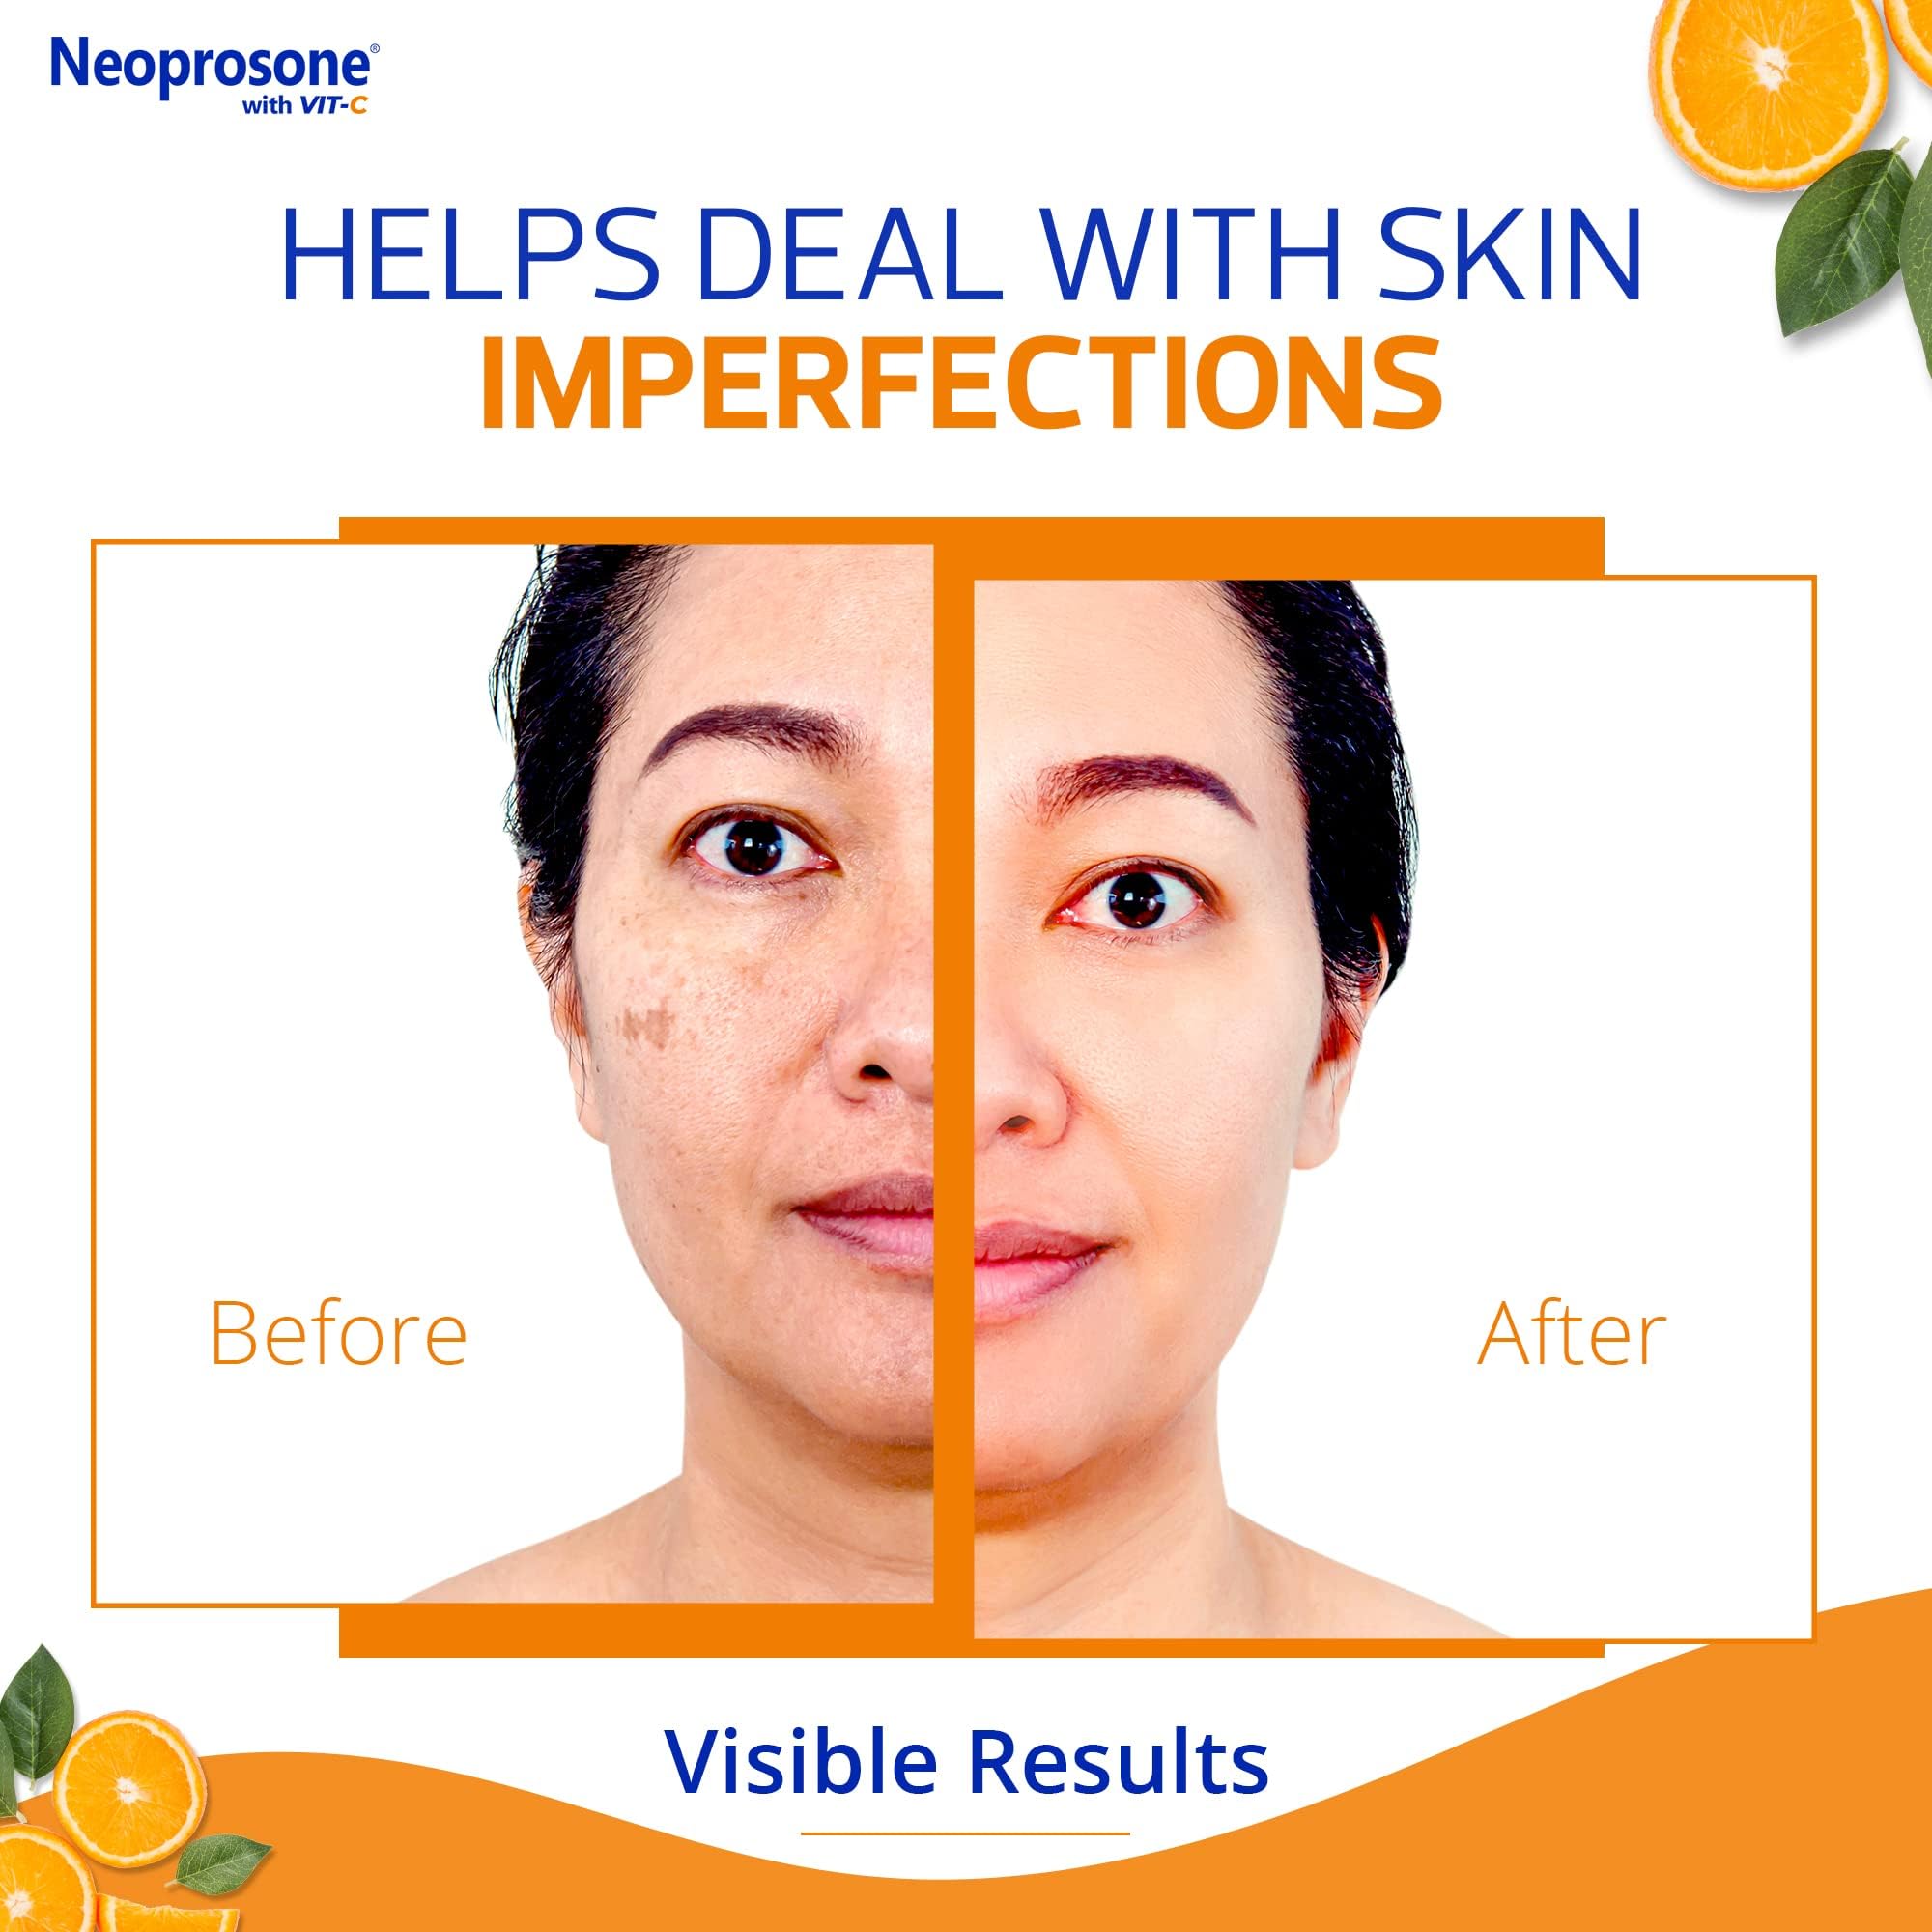 Neoprosone 20% Vitamin C Dark Spot Corrector Cream - 1 Fl oz / 30ml - Skin Brightening Gel Cream - with Hyaluronic Acid, Vitamin E